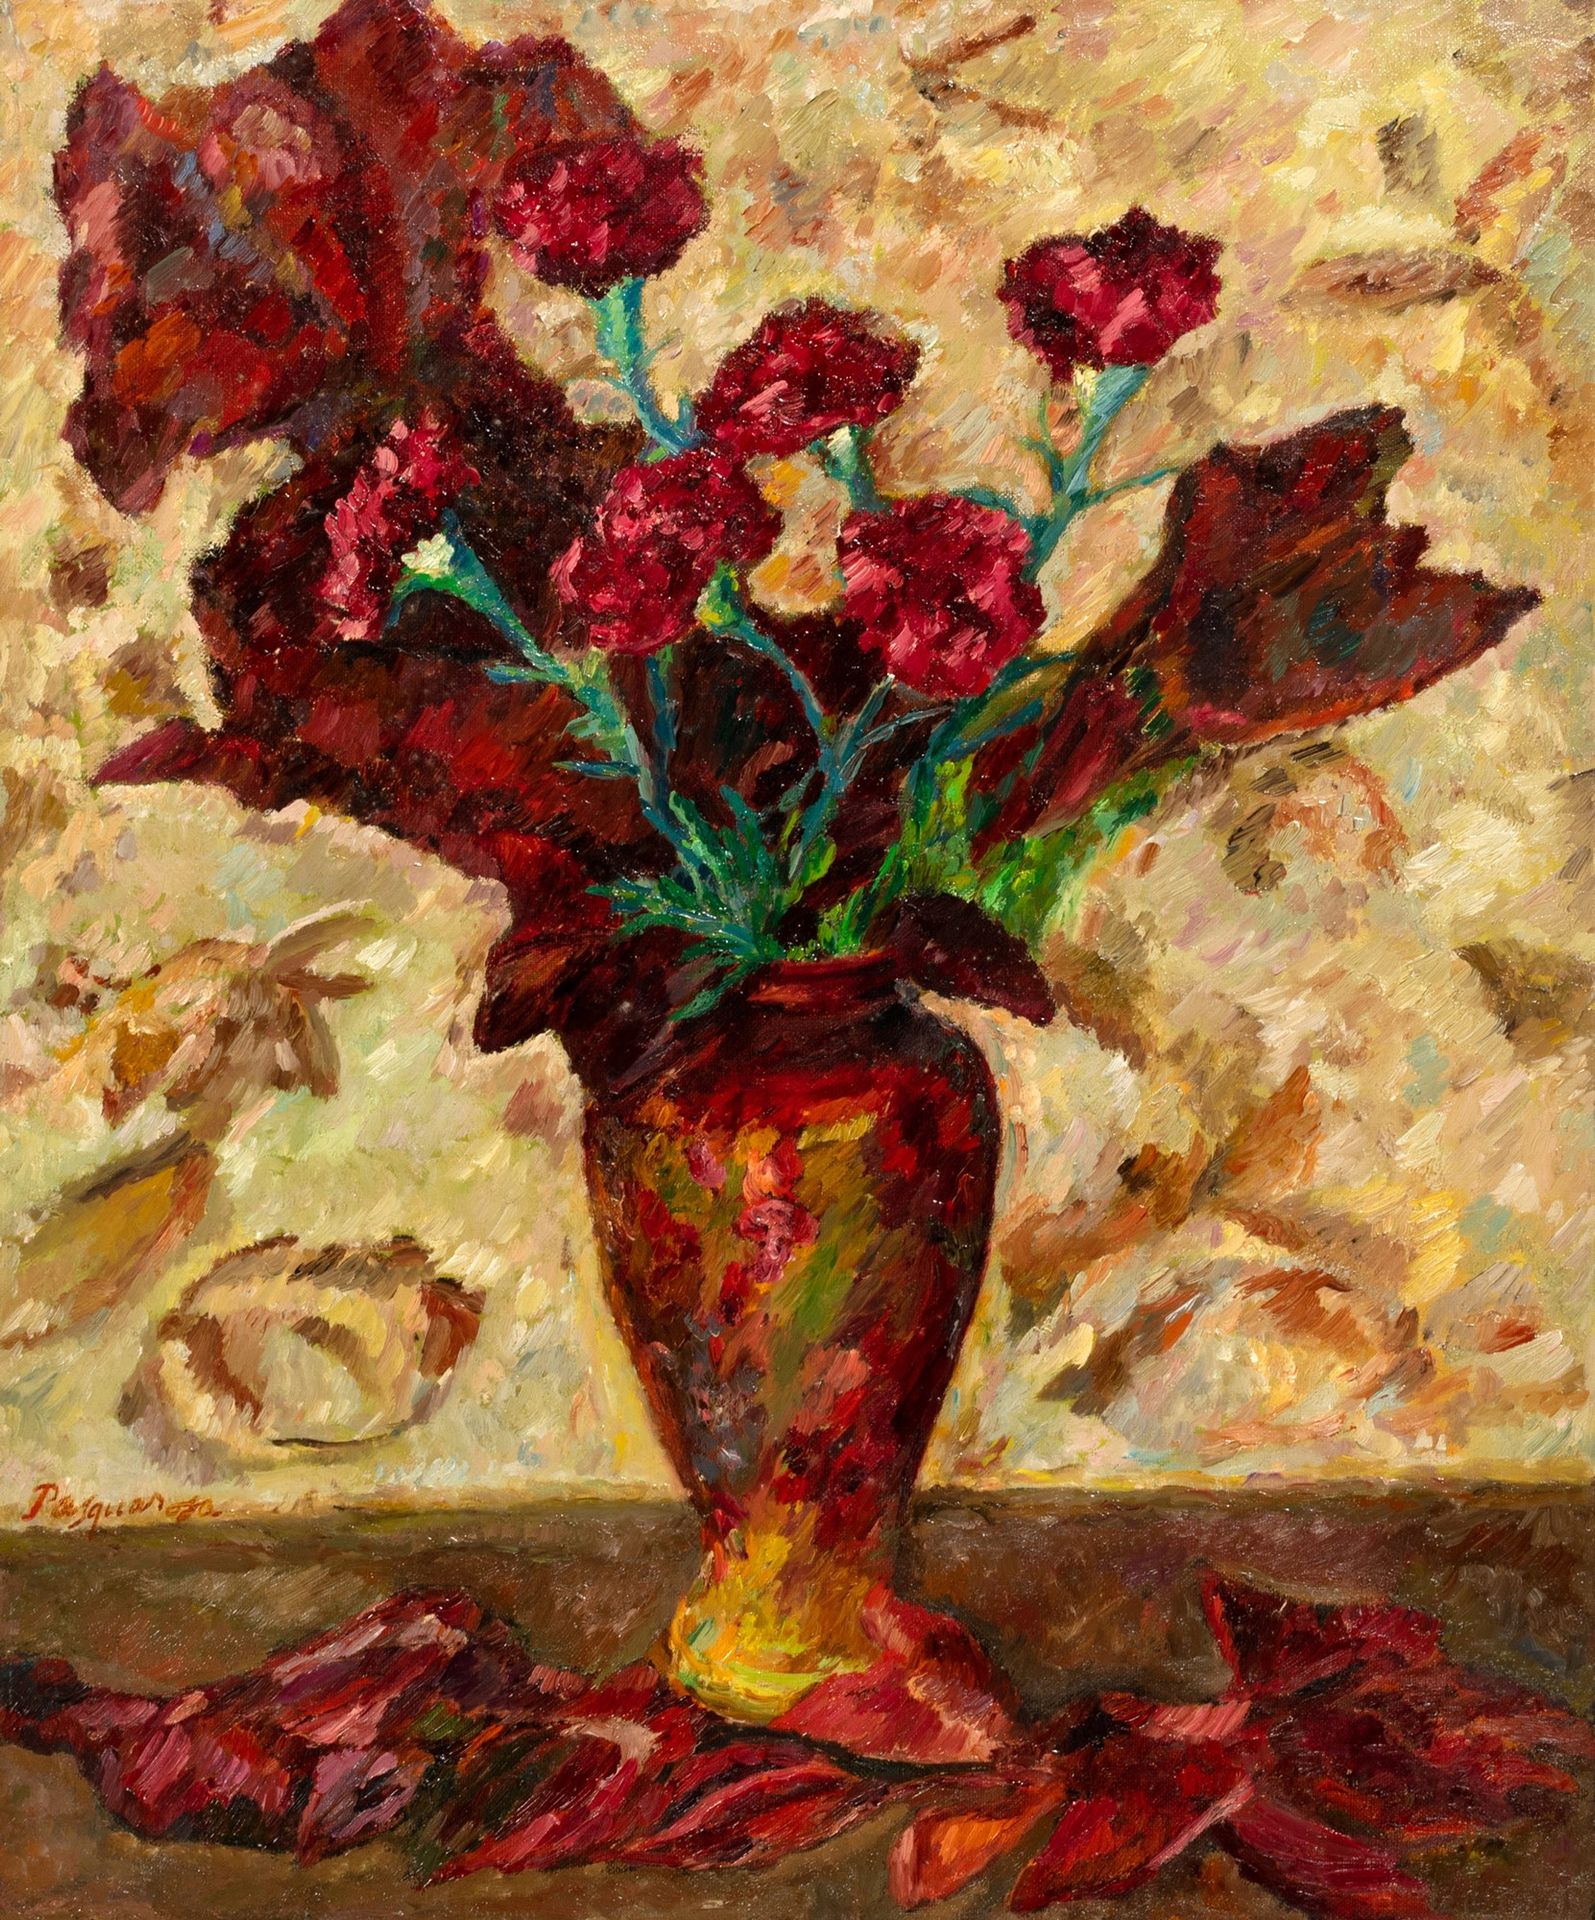 Pasquarosa Flores

óleo sobre lienzo
65 x 50 cm
Firmado abajo a la izquierda: Pa&hellip;